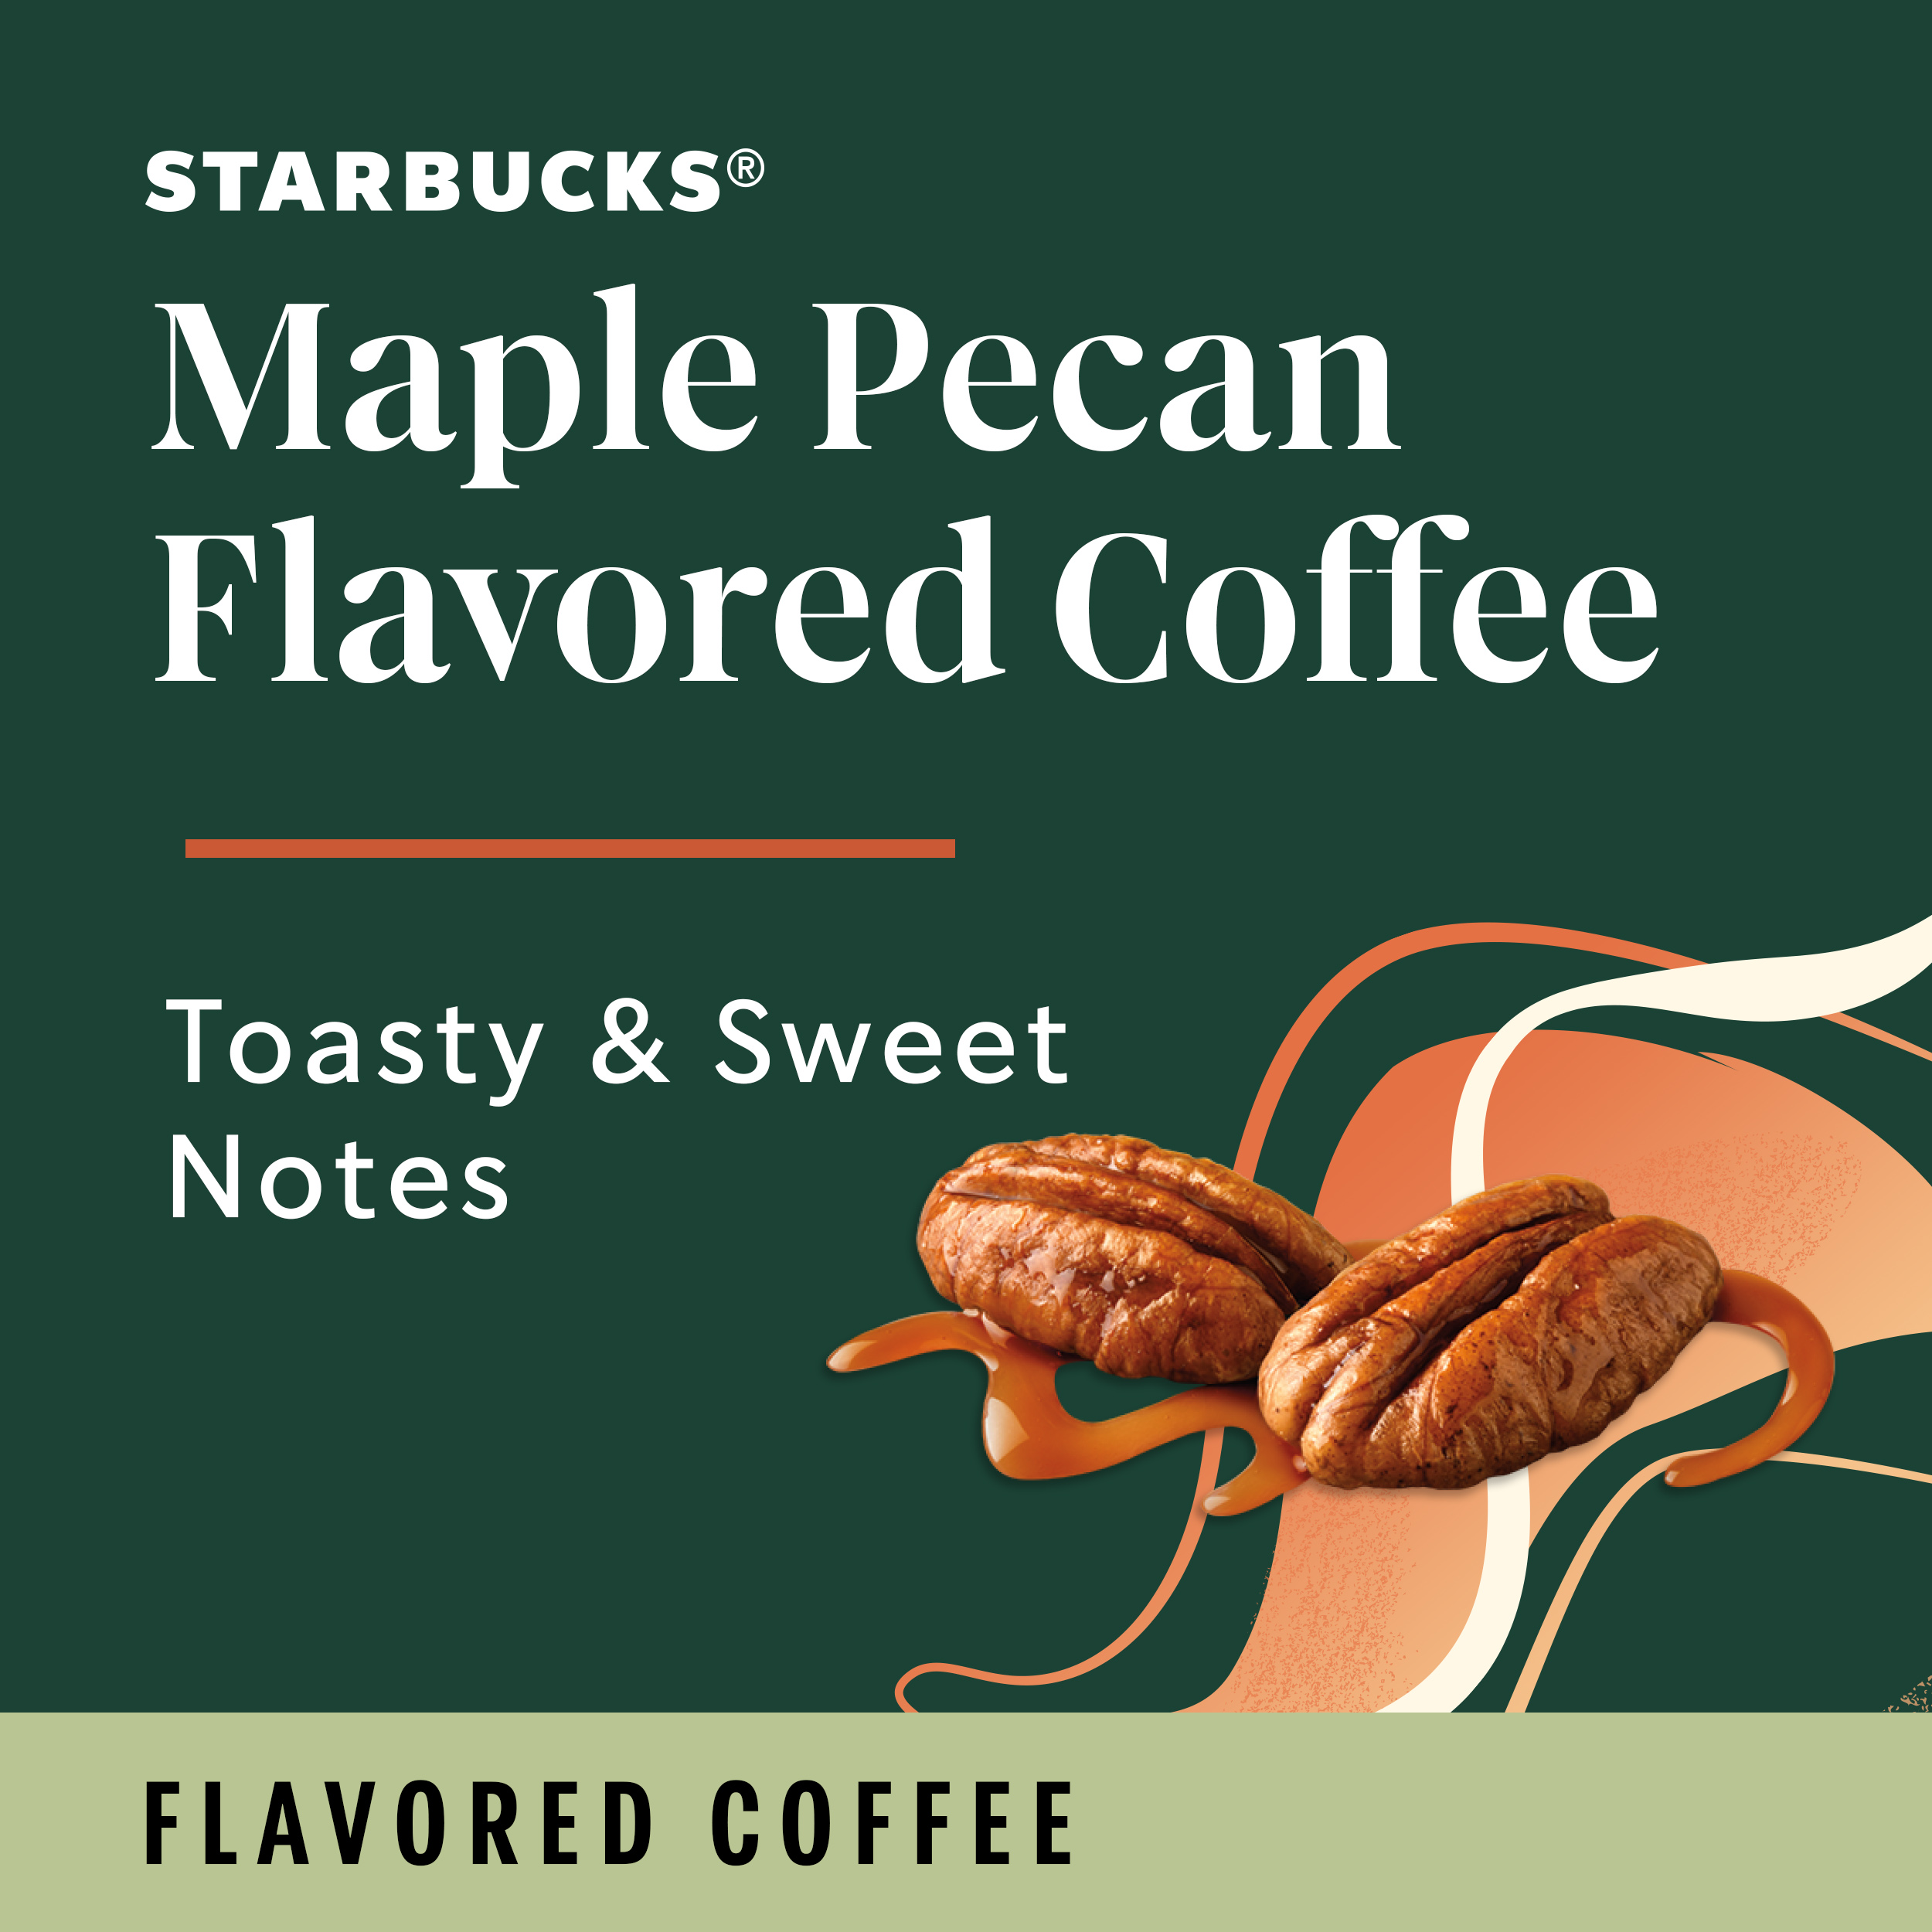 Starbucks Arabica Beans Maple Pecan, Light Roast, Ground Coffee, 17 oz - image 3 of 8